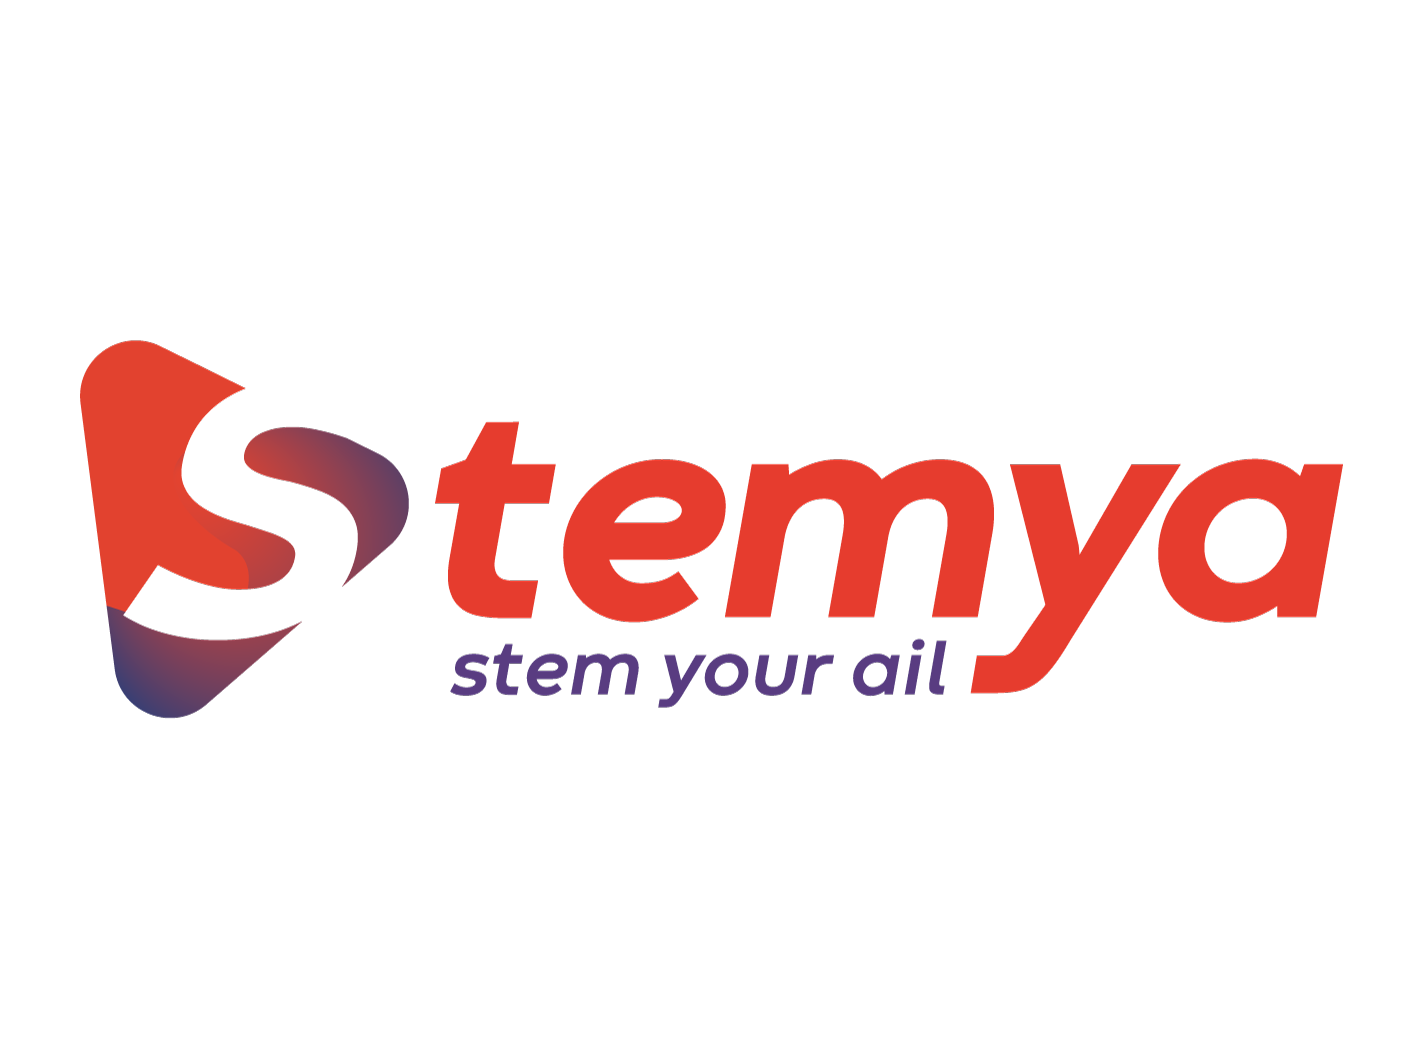 Stemya